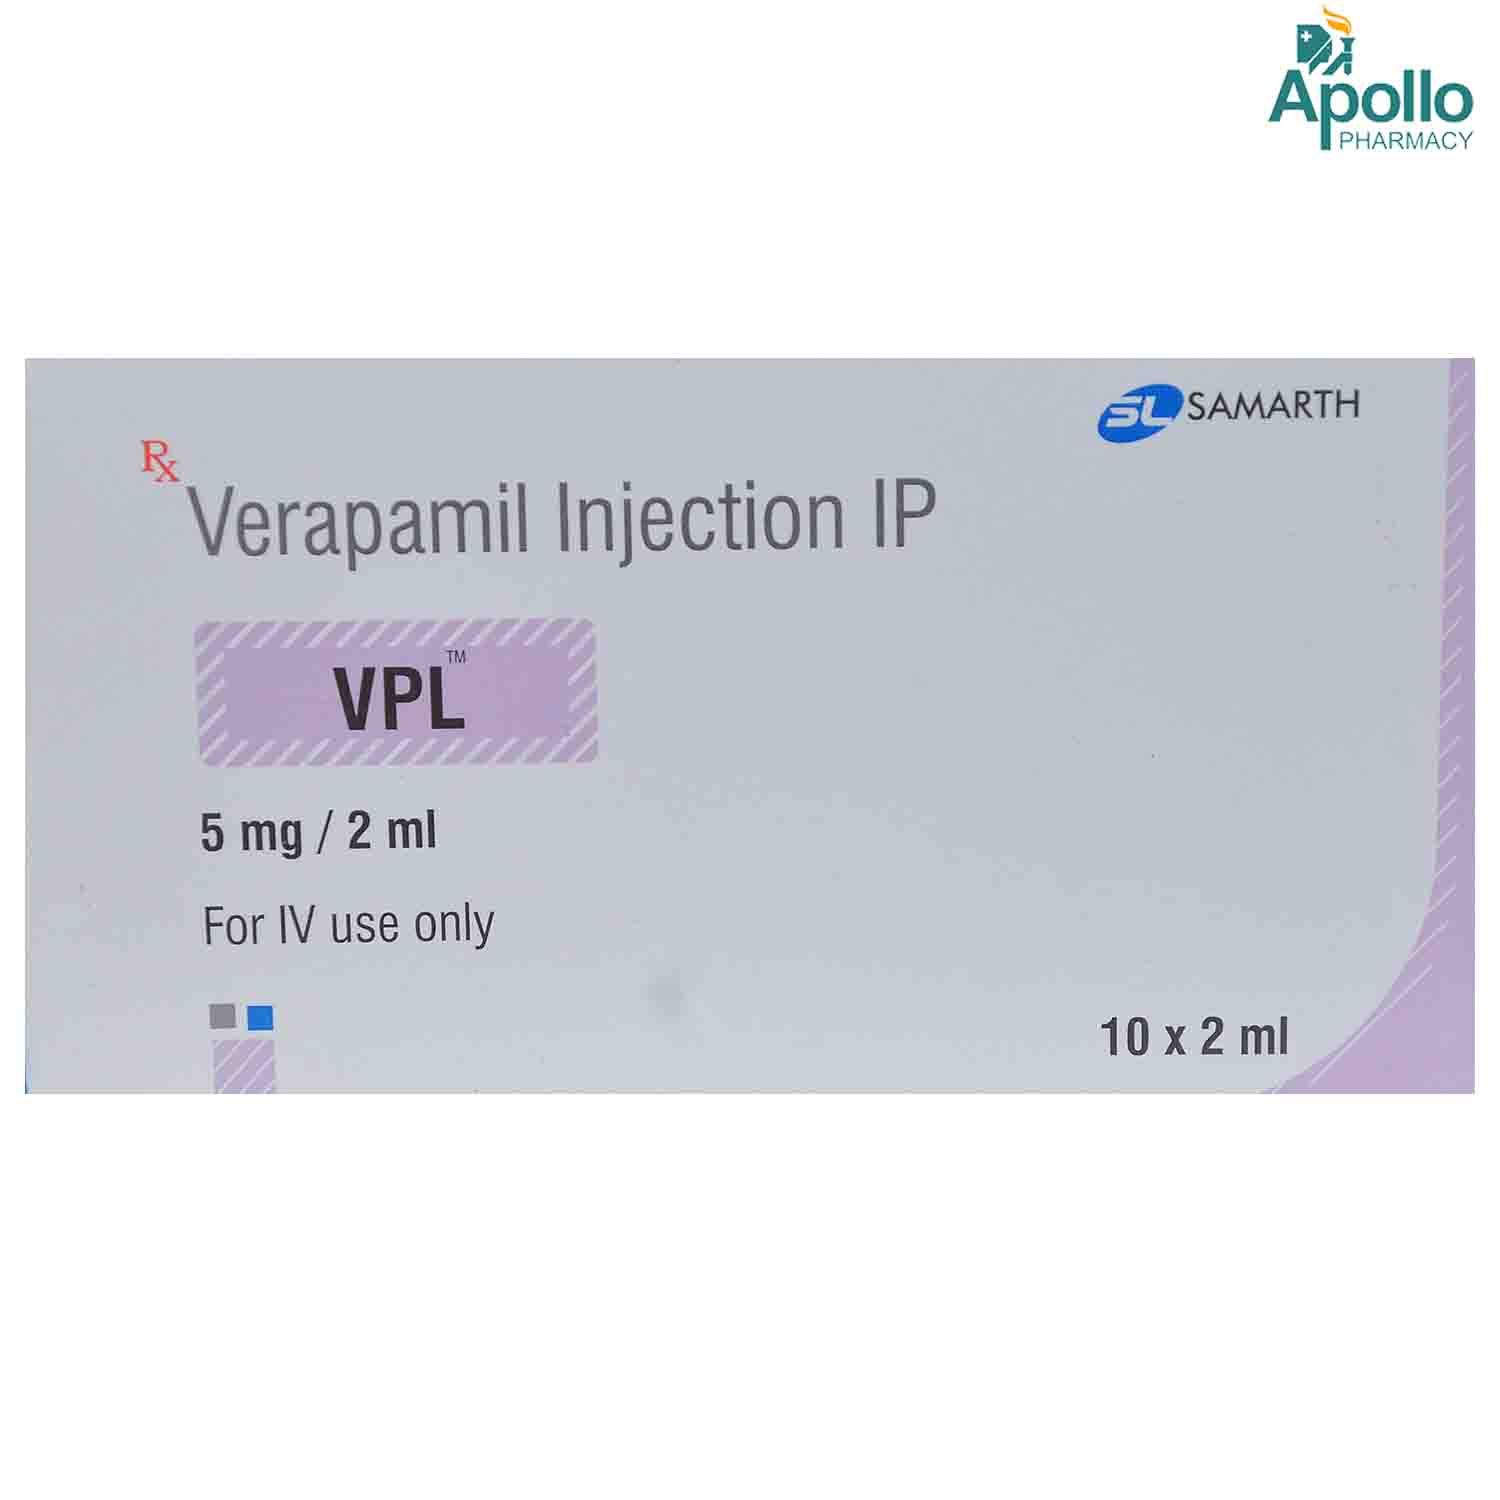 Buy Vpl 5 mg Injection 10 x 2 ml  Online